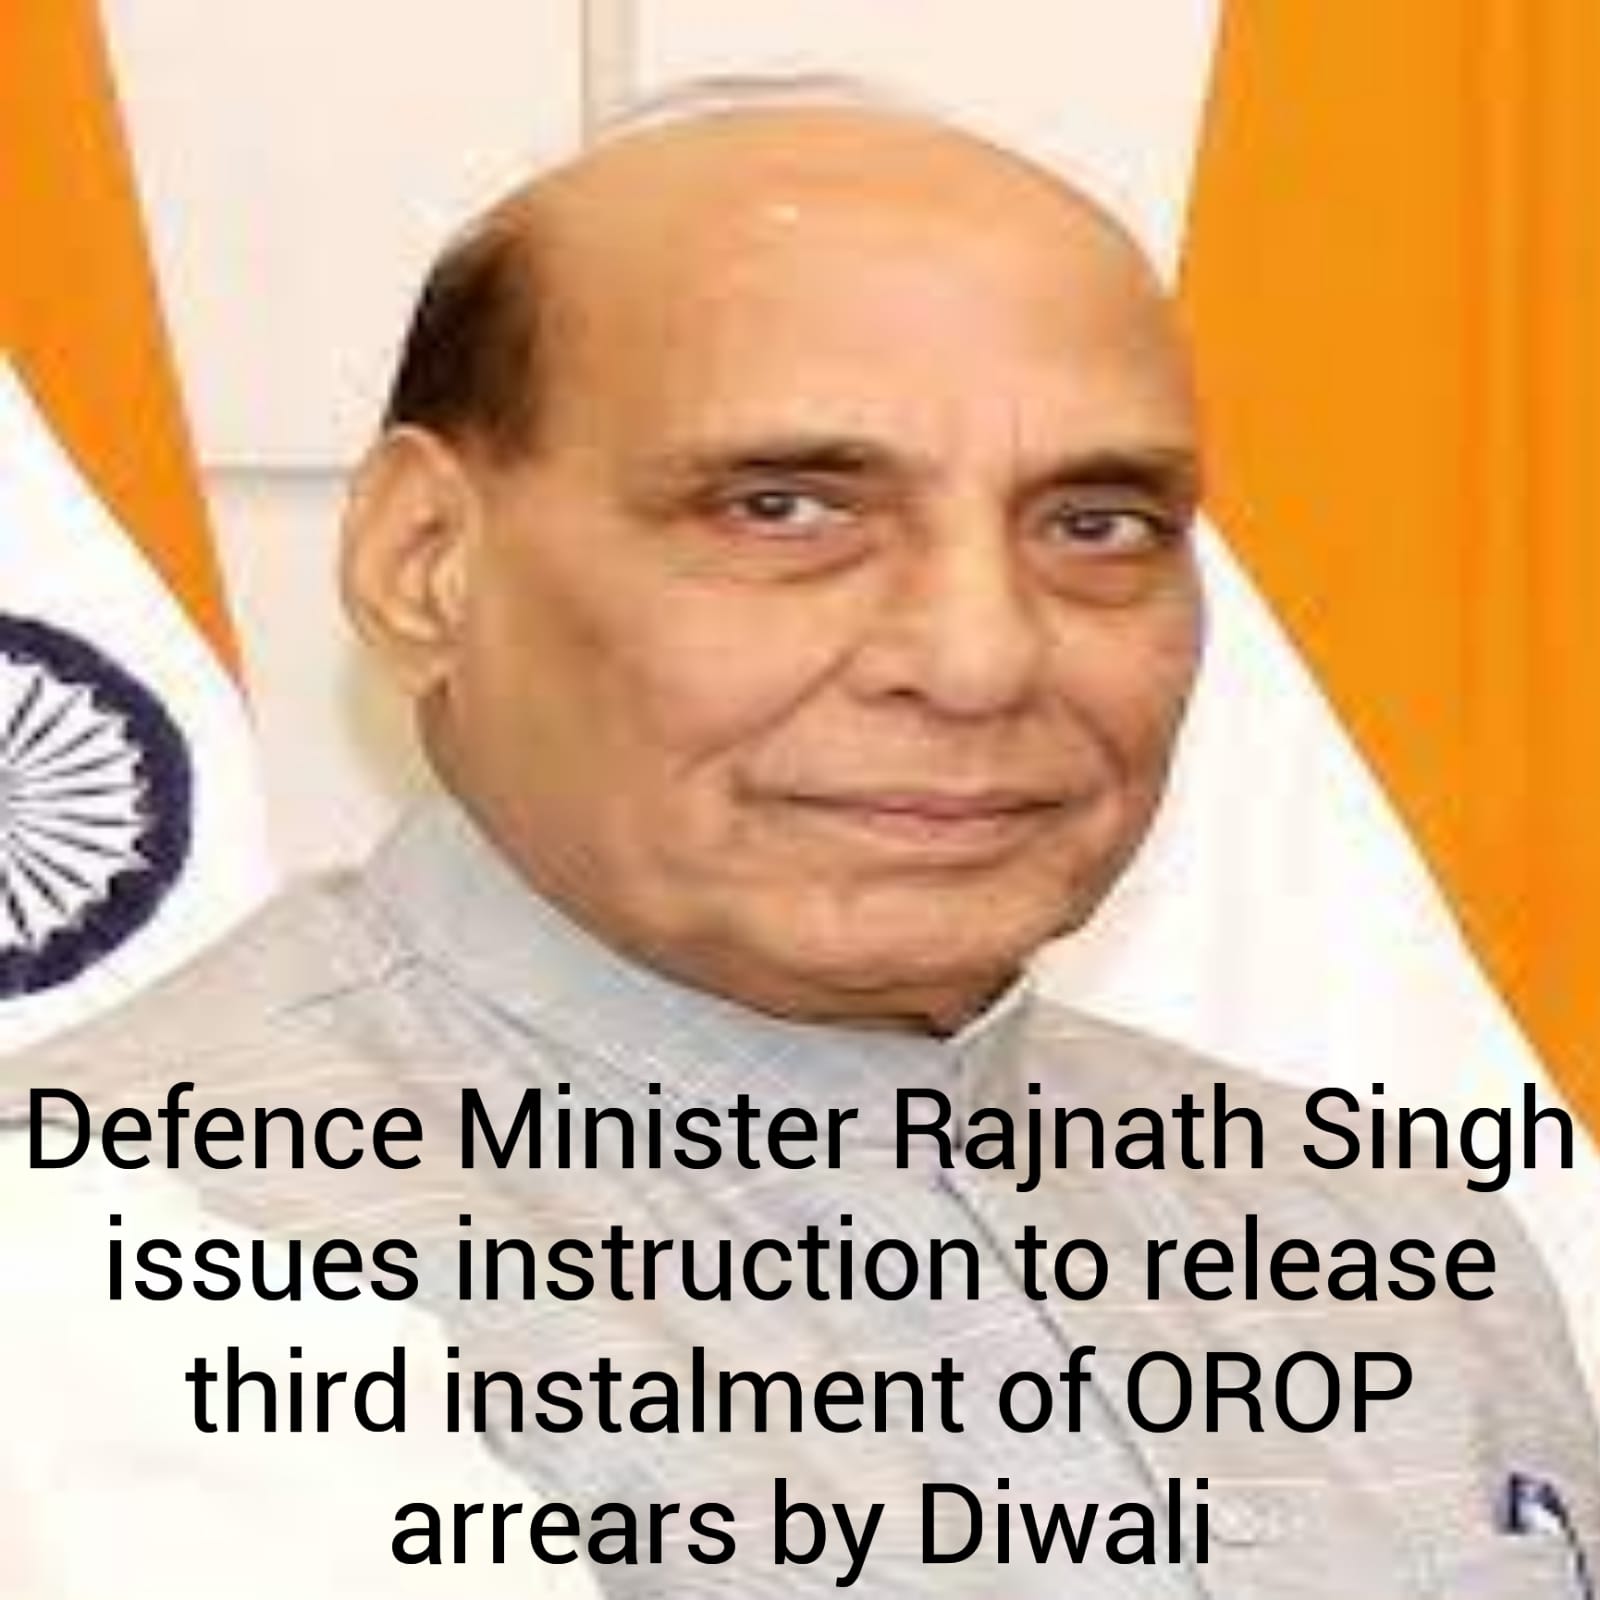 Release third instalment of OROP arrears by Diwali